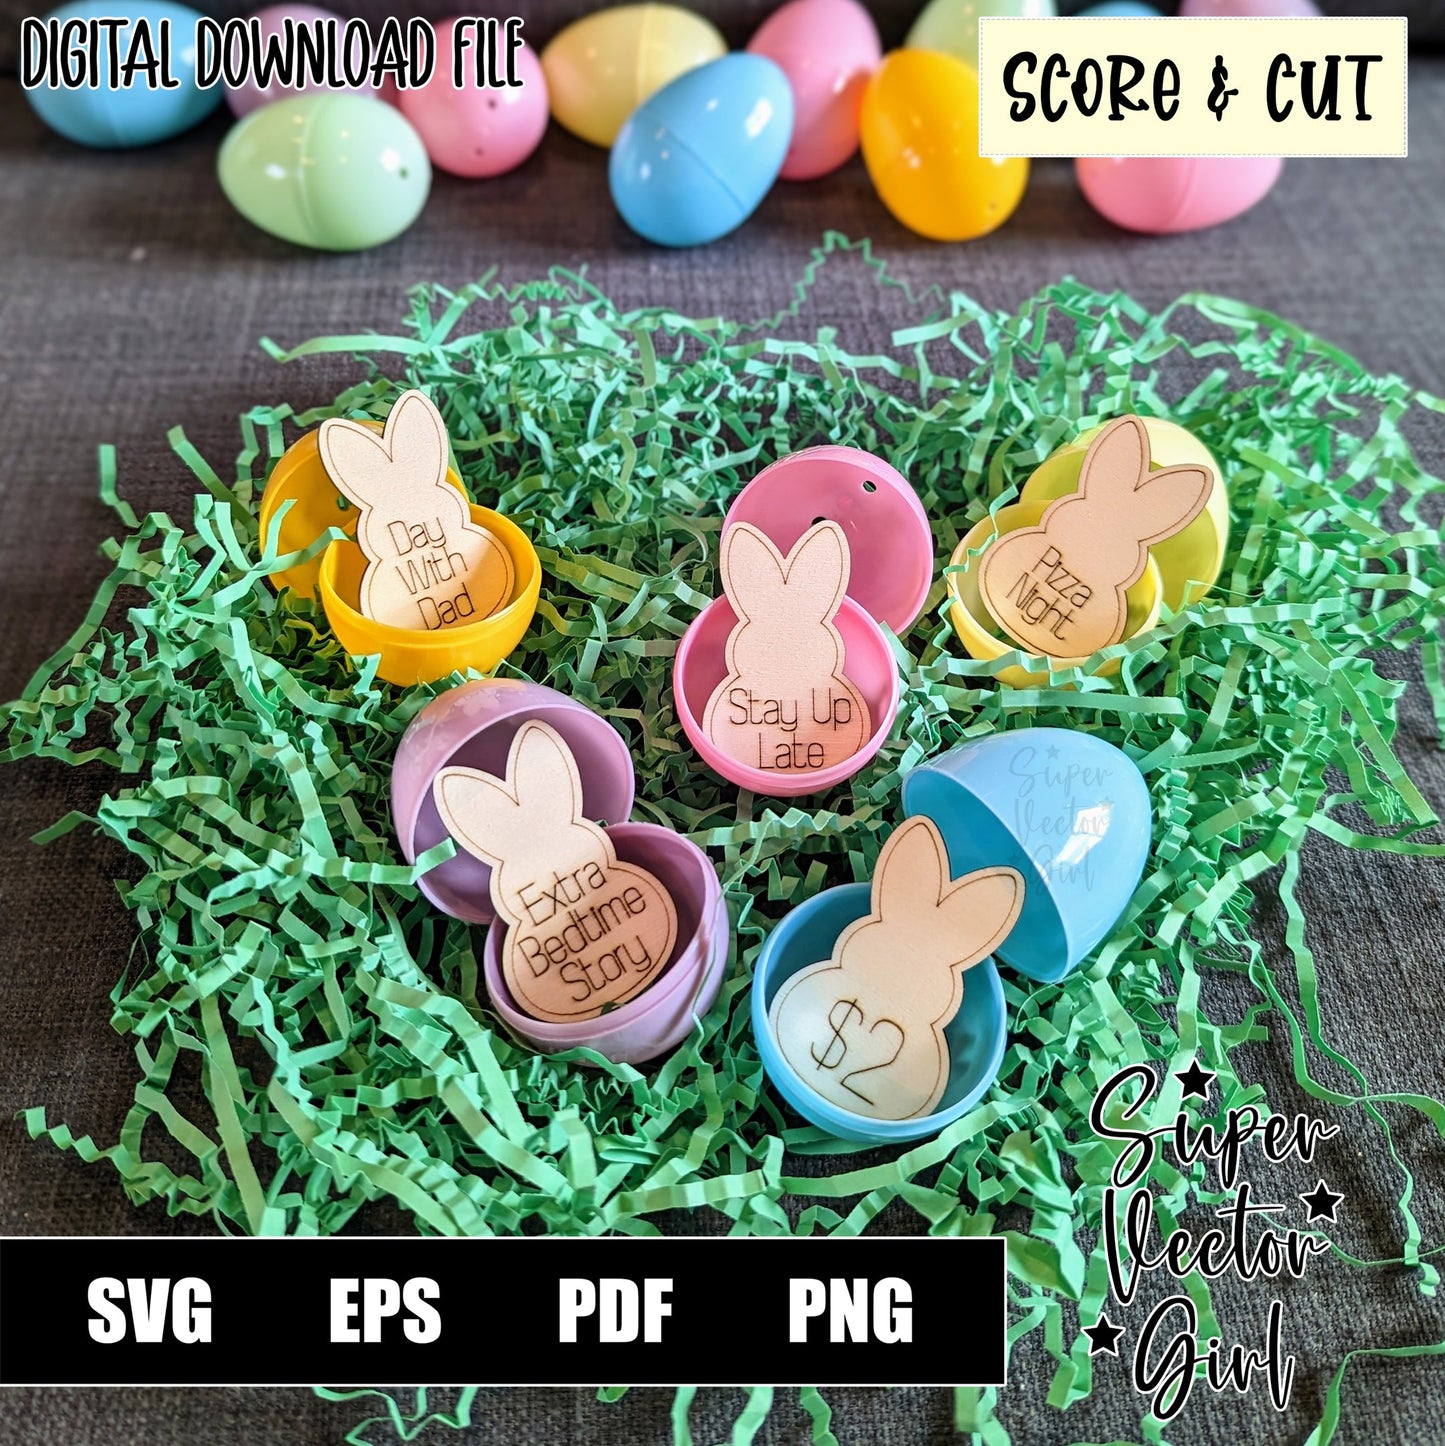 Easter Bunny Egg Tokens SVG Set, Score & Cut, Laser Cut File, xTool Glowforge files, Cute Rabbit, Egg Filler, Prize Reward Token Kids Eggs Hunt